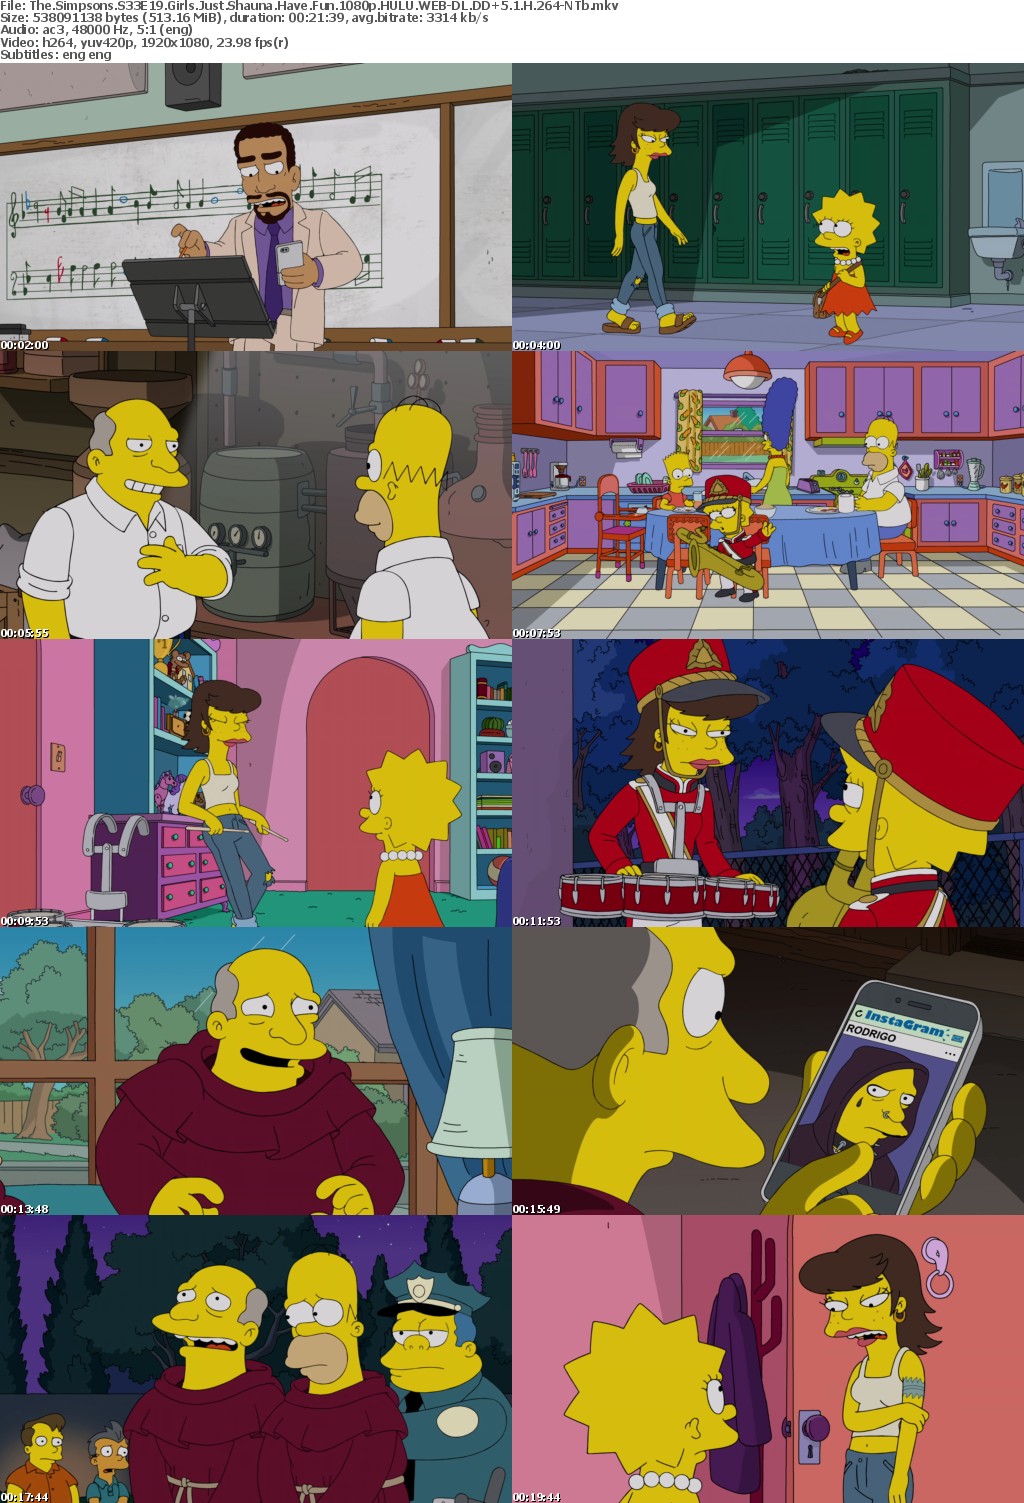 The Simpsons S33E19 Girls Just Shauna Have Fun 1080p HULU WEBRip DDP5 1 x264-NTb